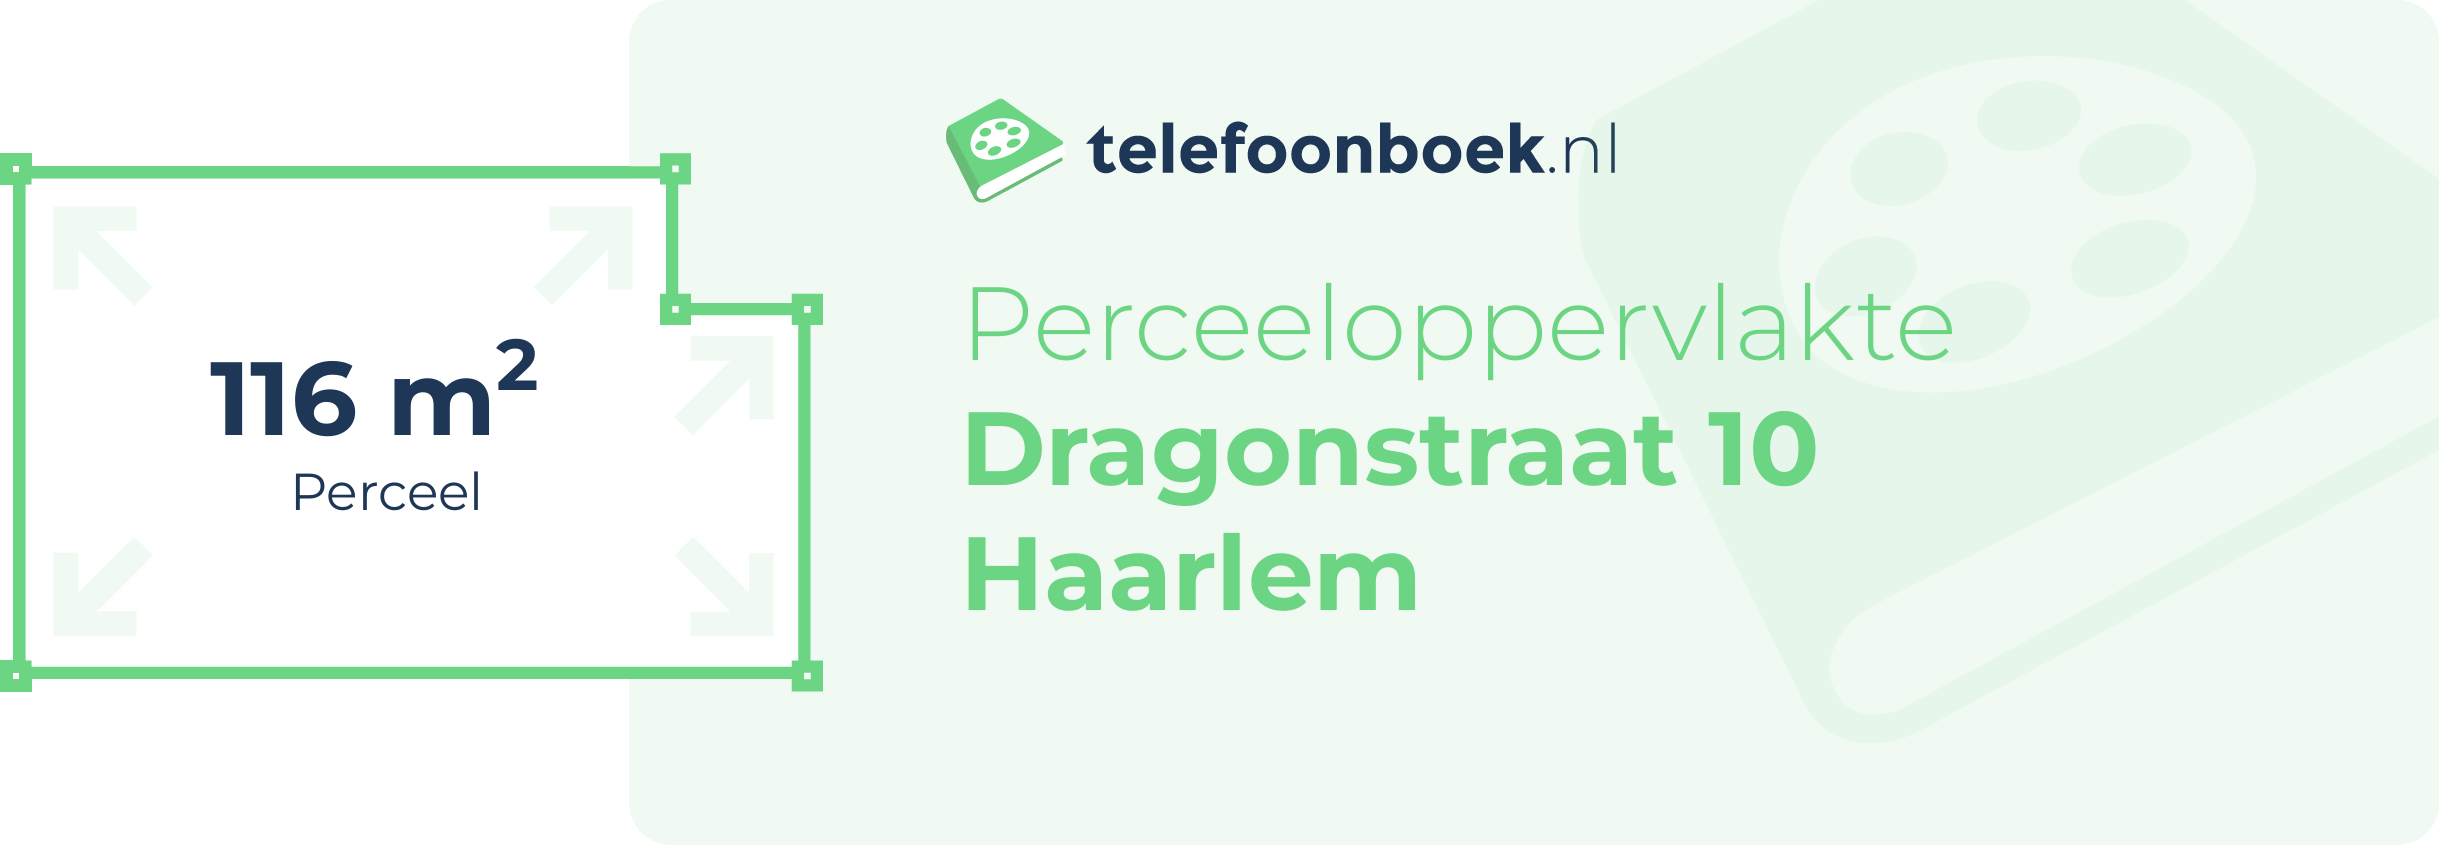 Perceeloppervlakte Dragonstraat 10 Haarlem